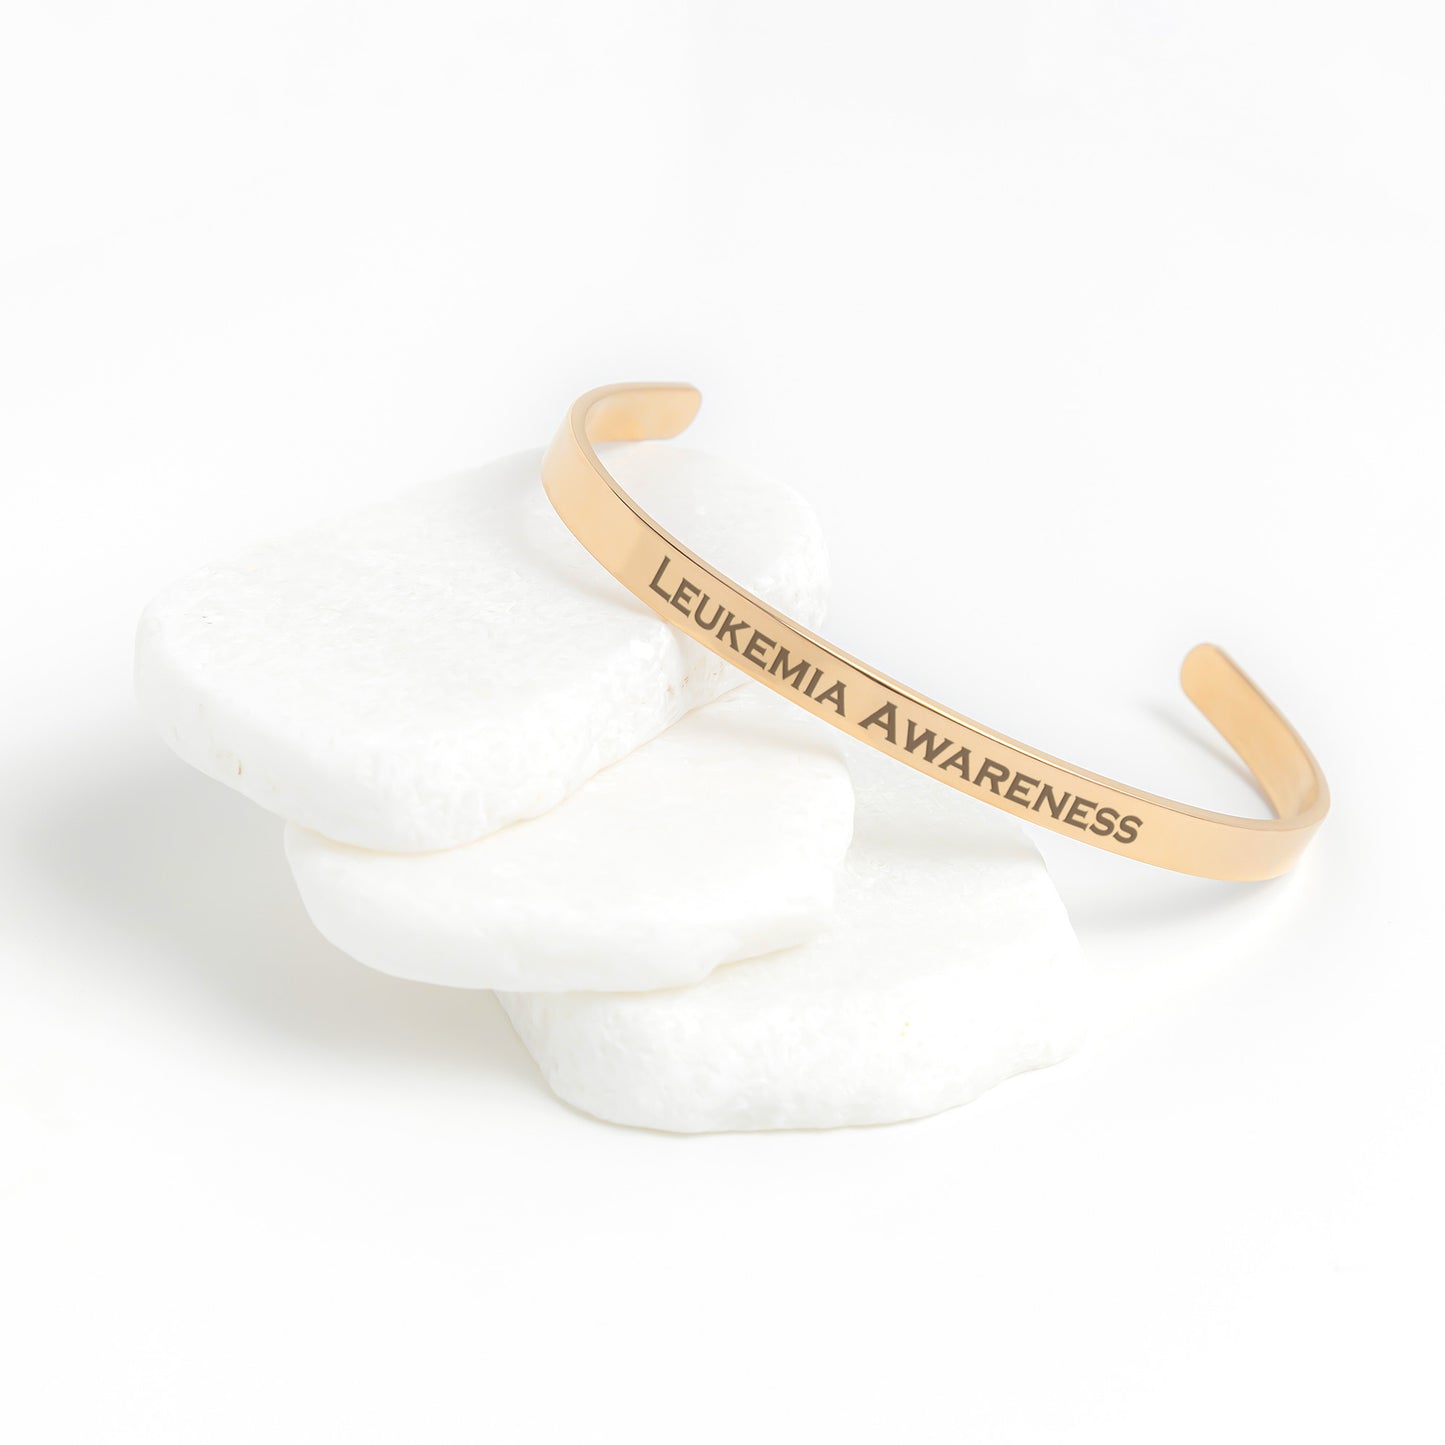 Personalized Leukemia Awareness Cuff Bracelet